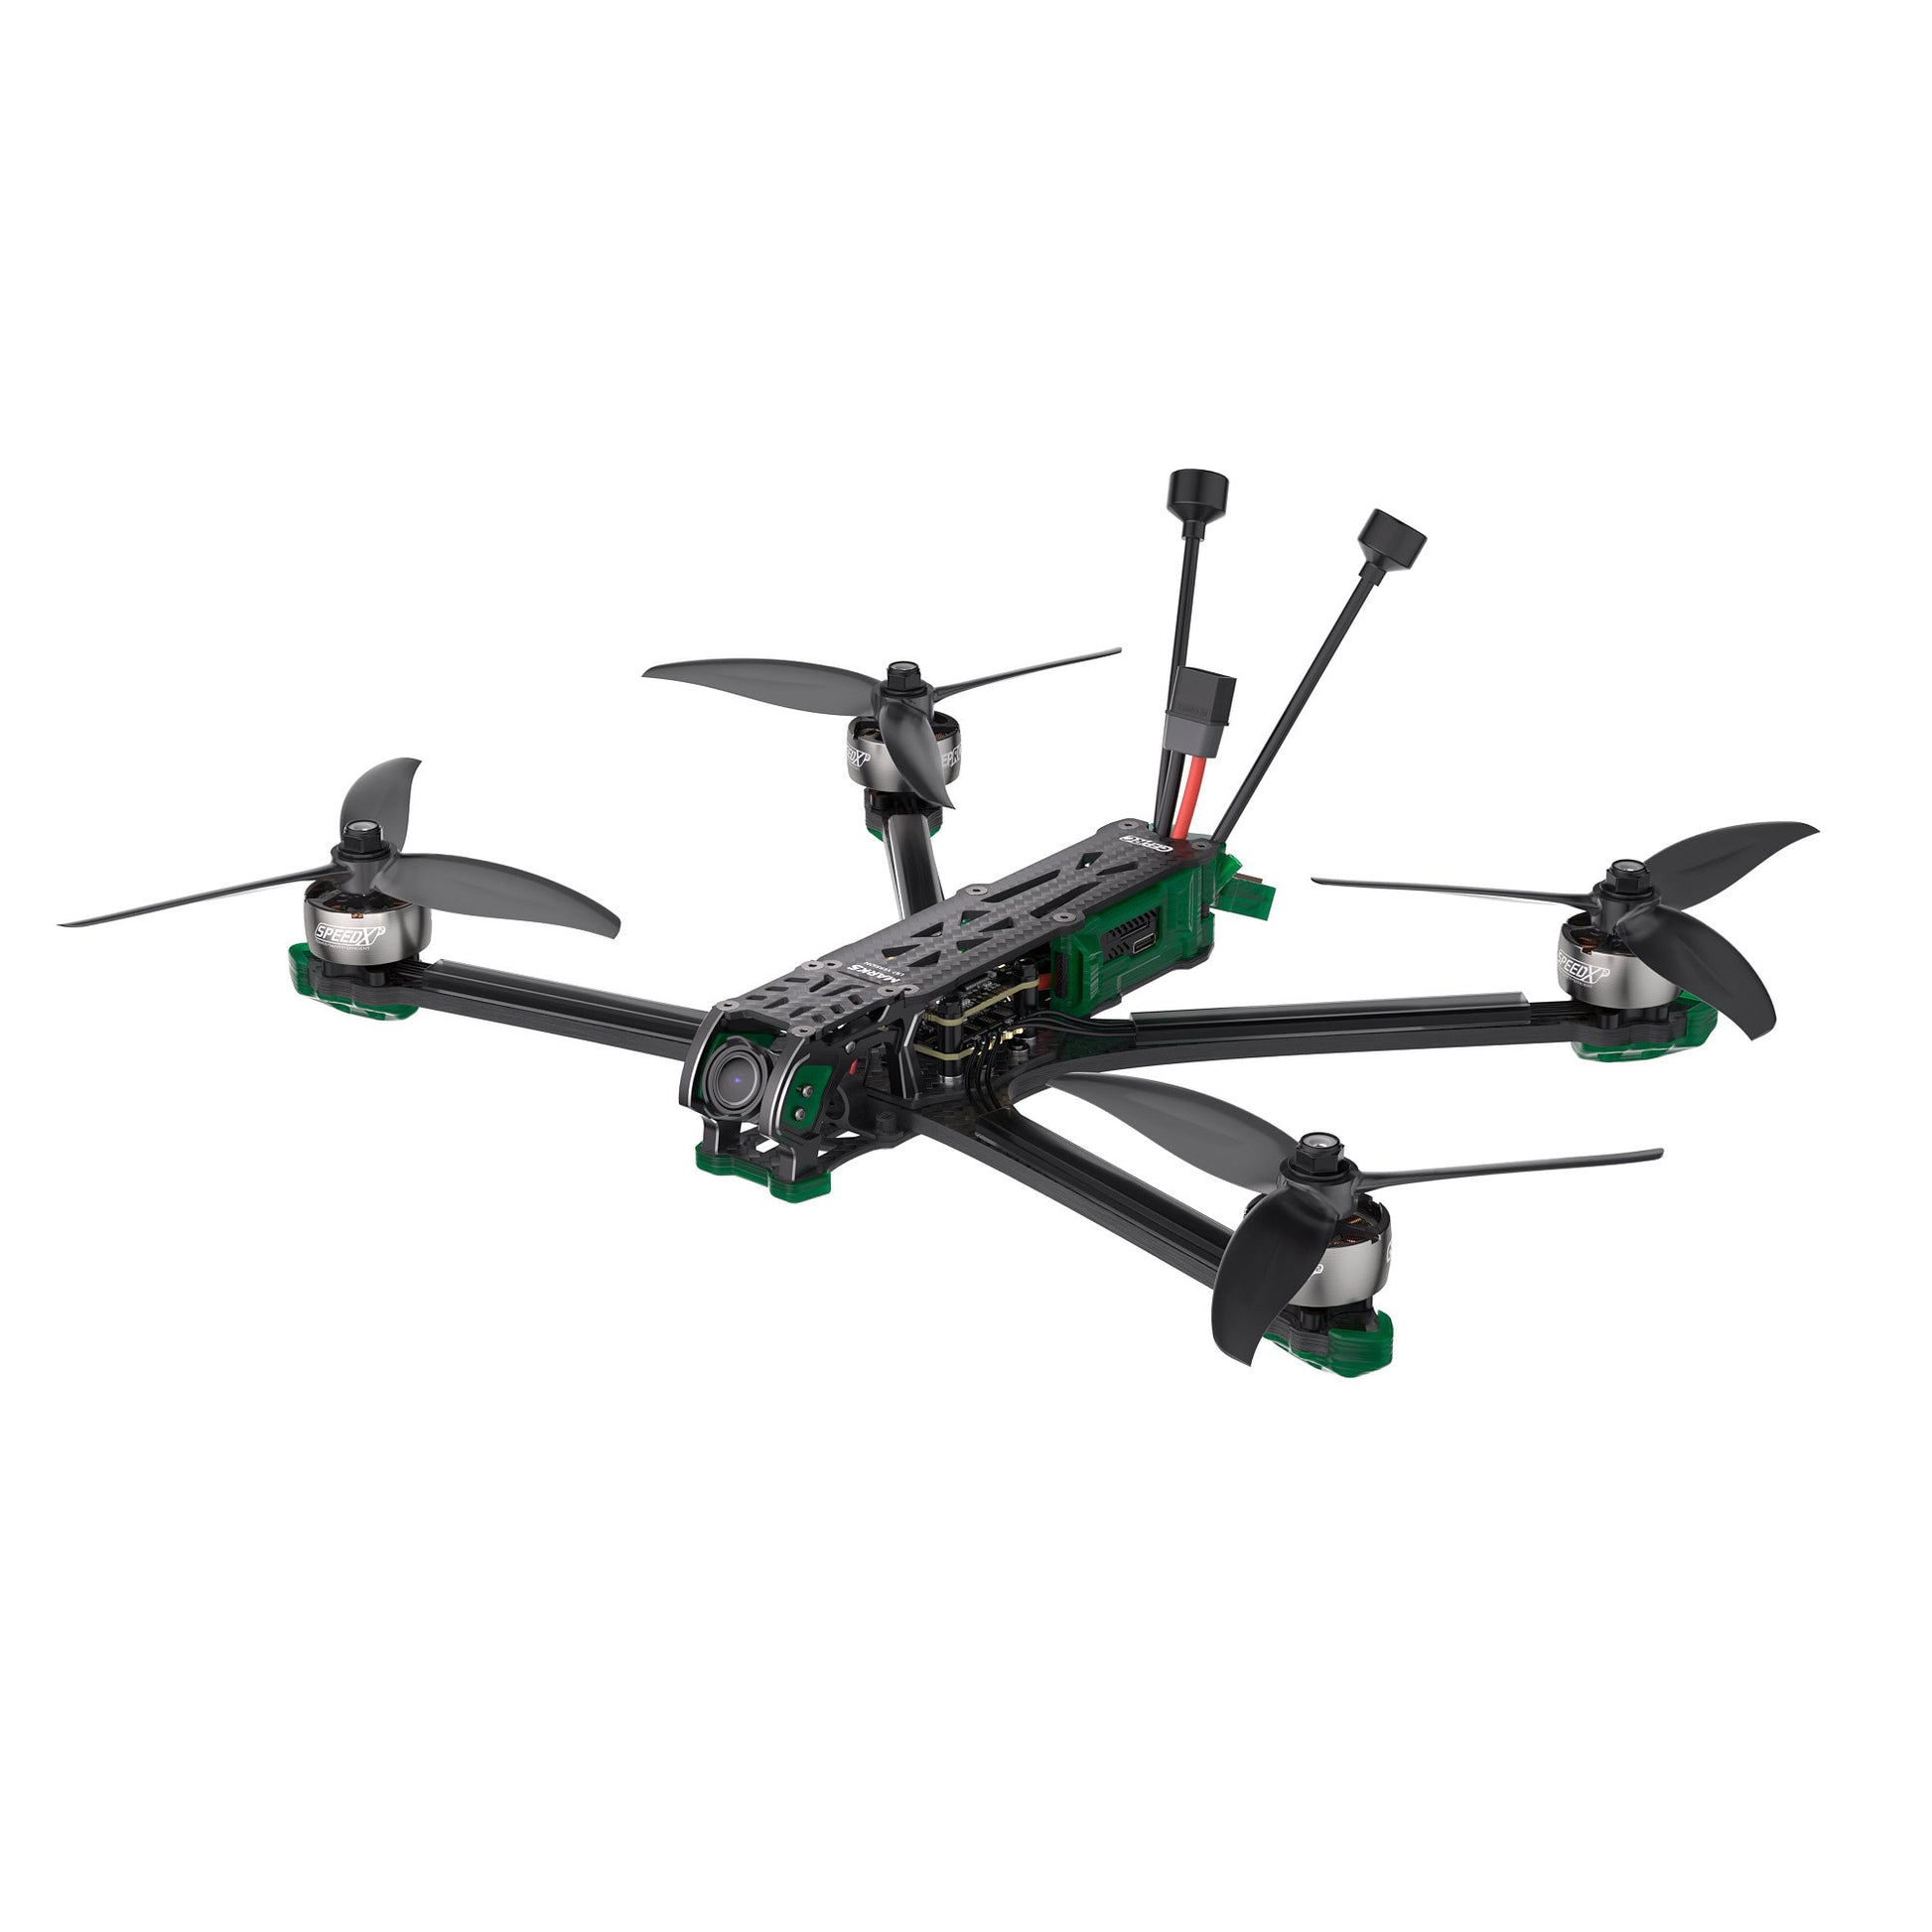 GEPRC MK5D-LR7 HD O3 - Long Range FPV Drone Air Unit SPAN F722 BT HD V2 2806.5 1350KV TBS ELRS RC FPV Quadcopter Freestyle Drone